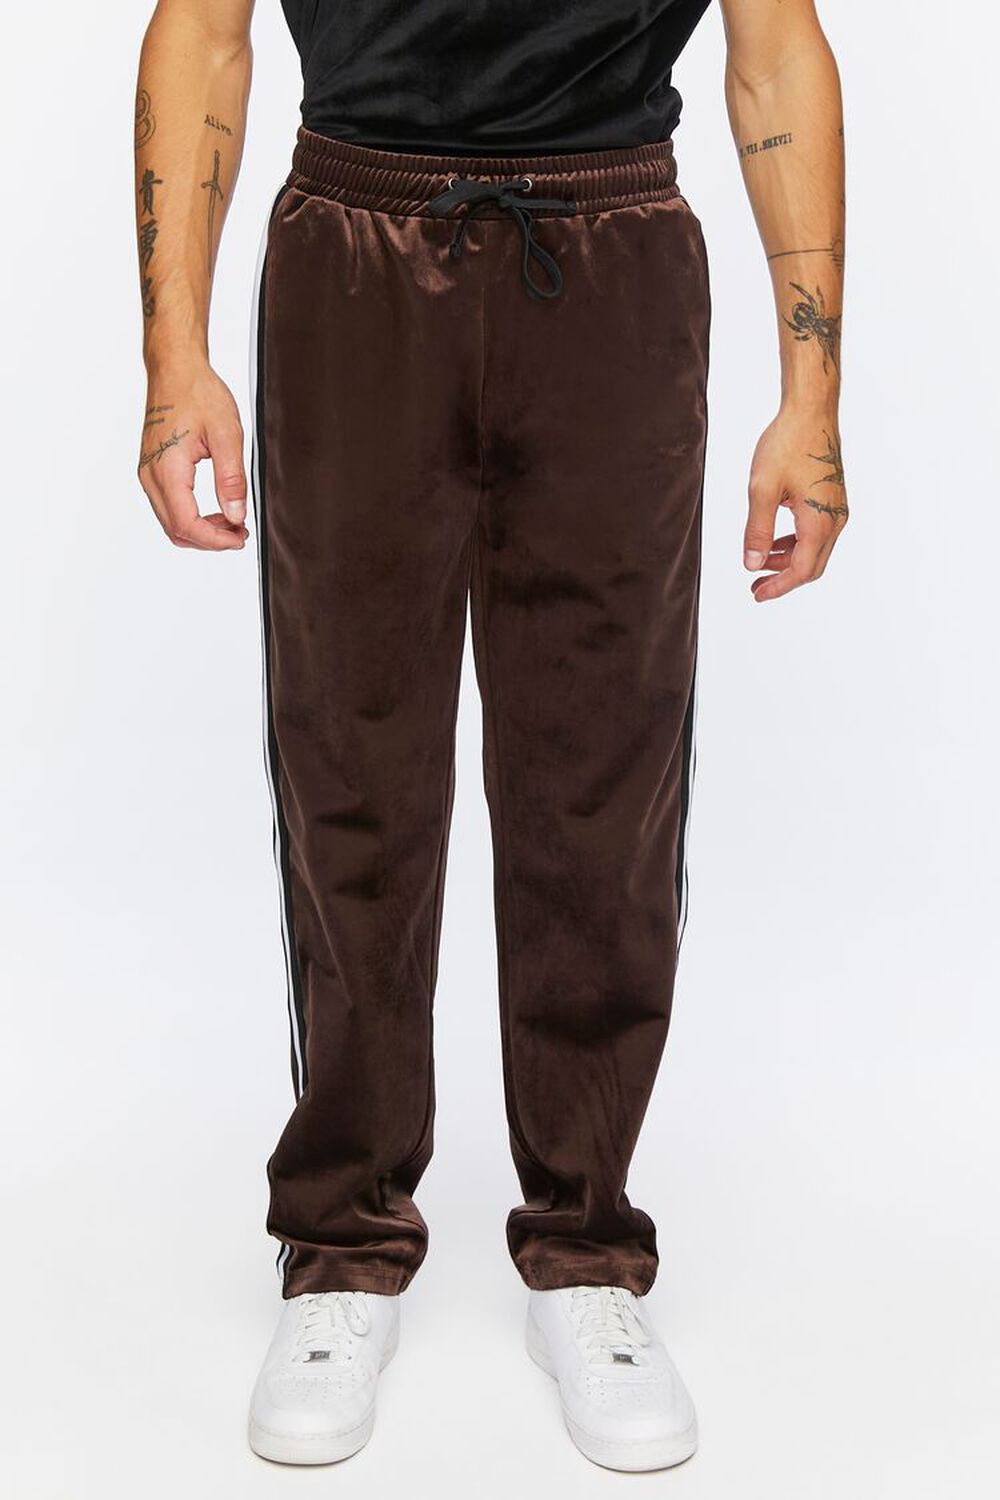 DARK BROWN/BLACK Velour Drawstring Slim-Fit Pants, image 2